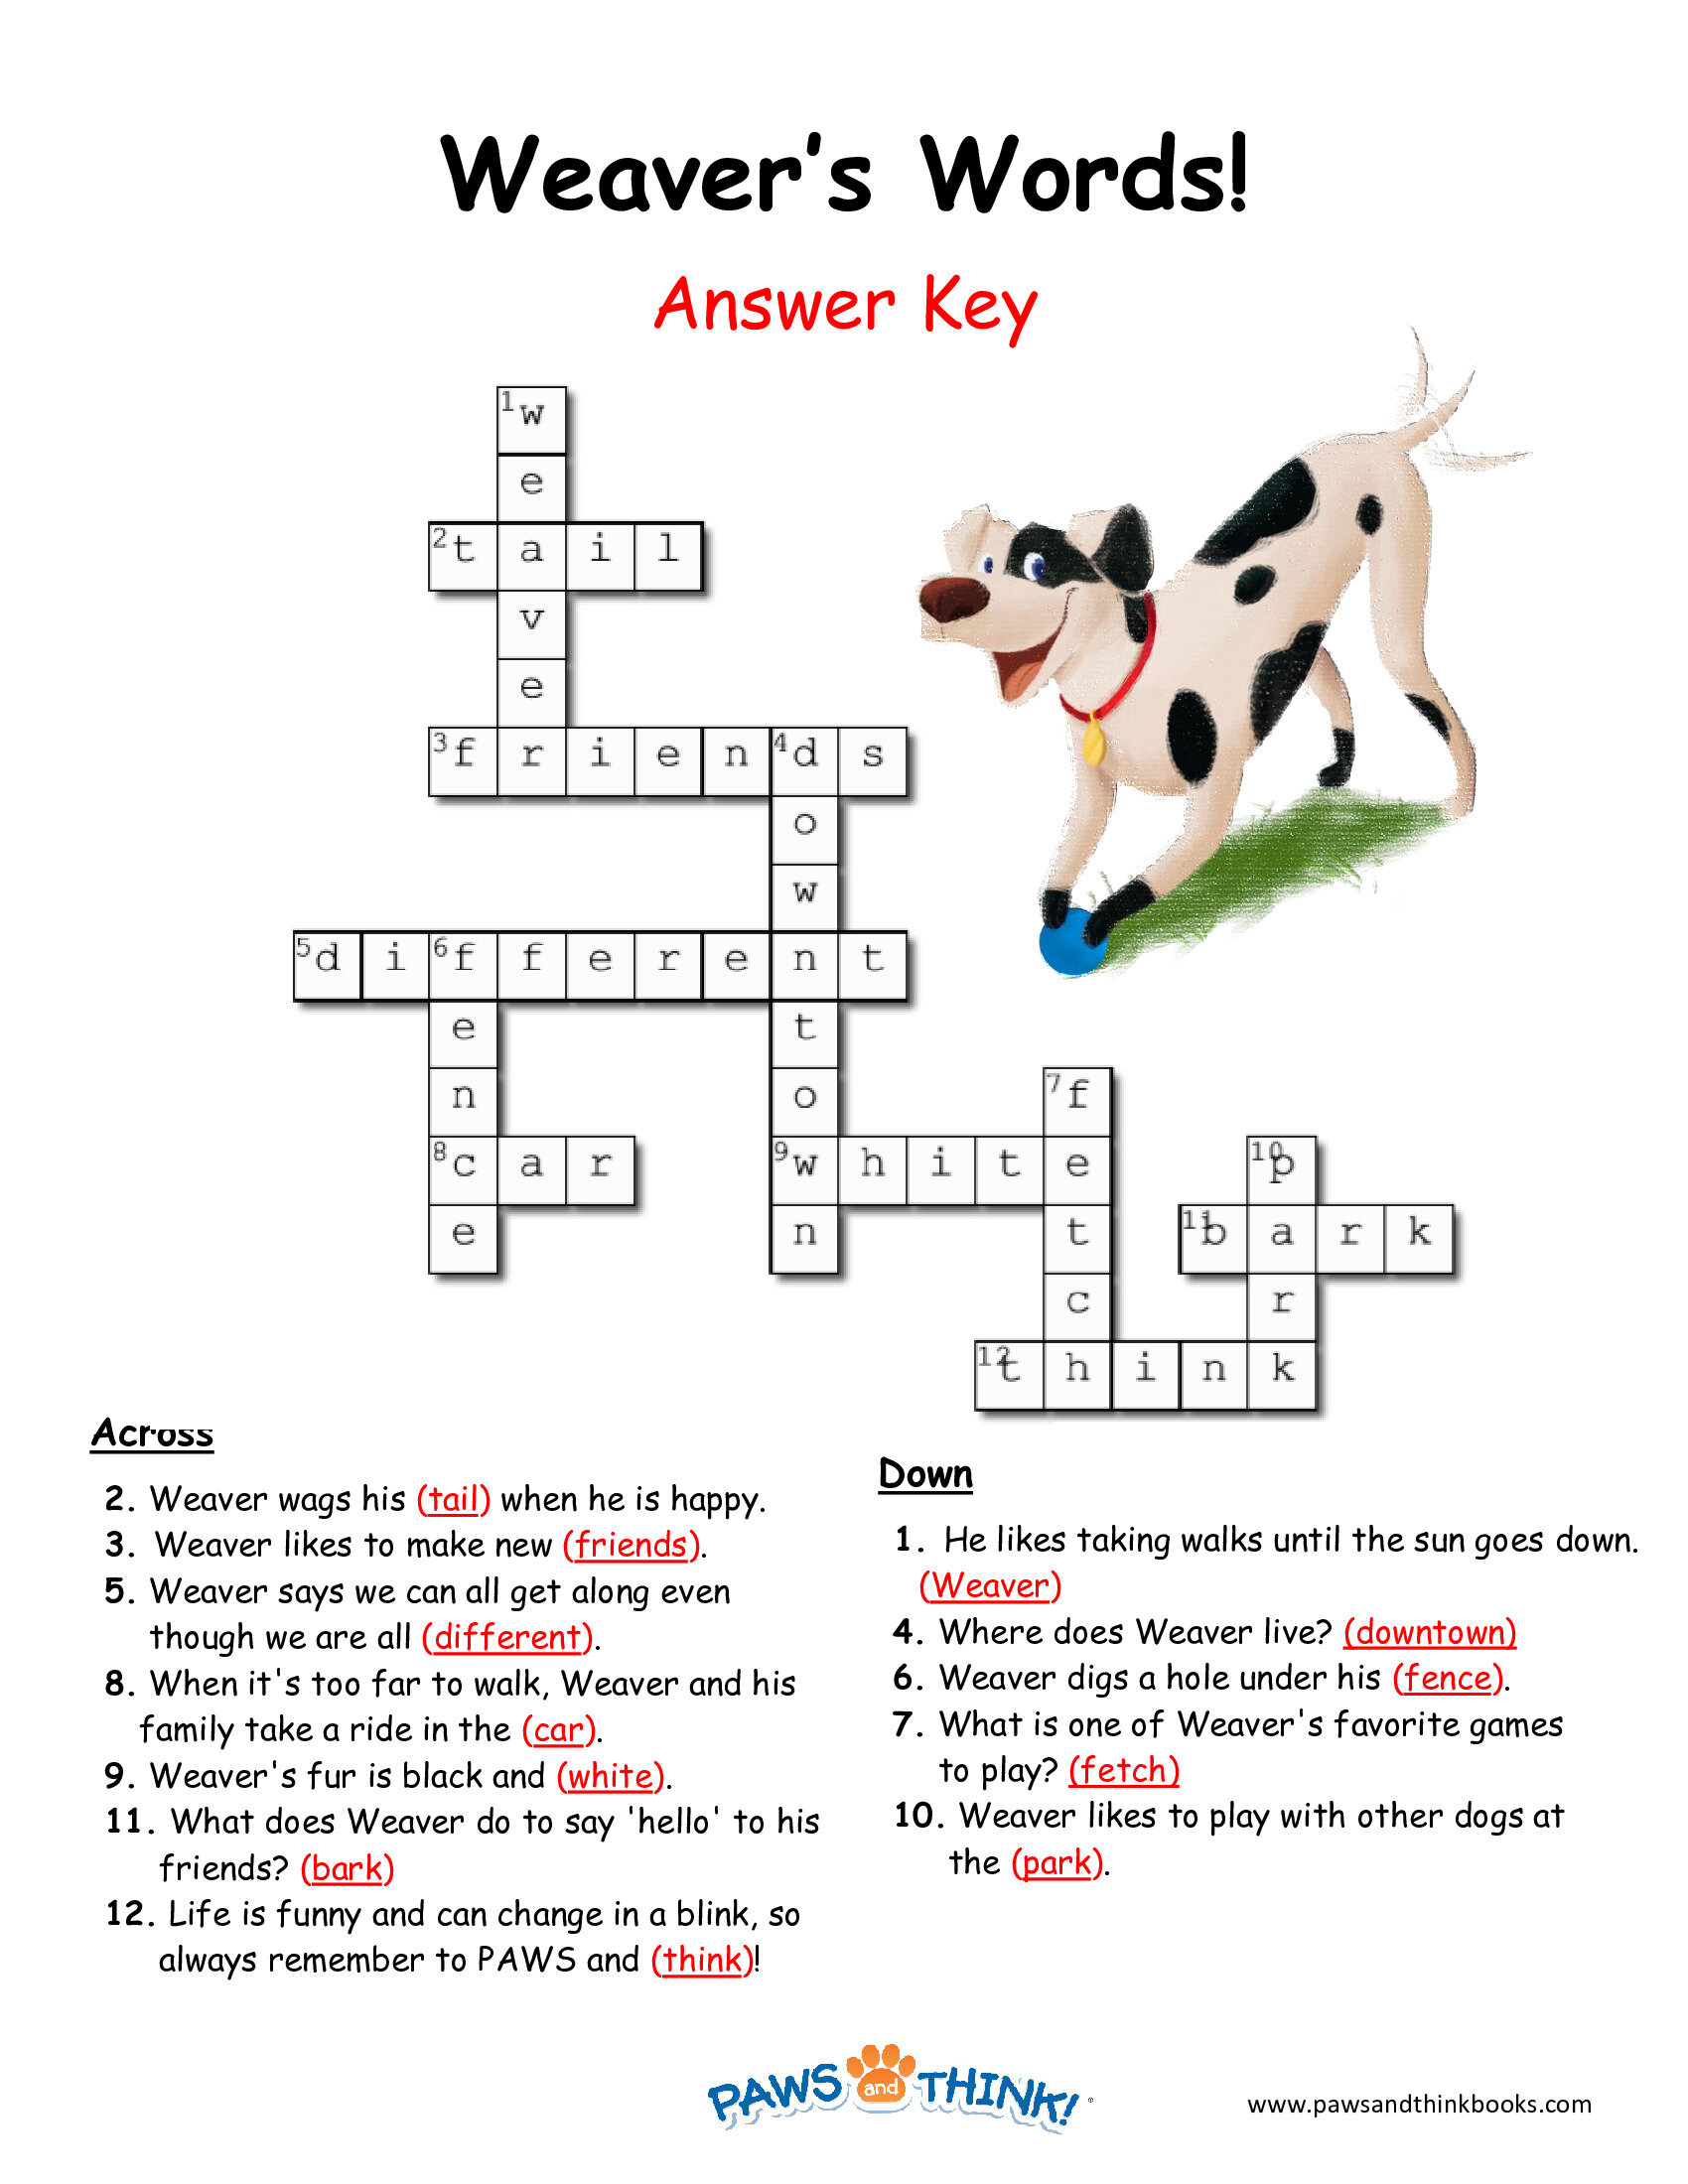 Crossword Puzzle Answer Key.jpg